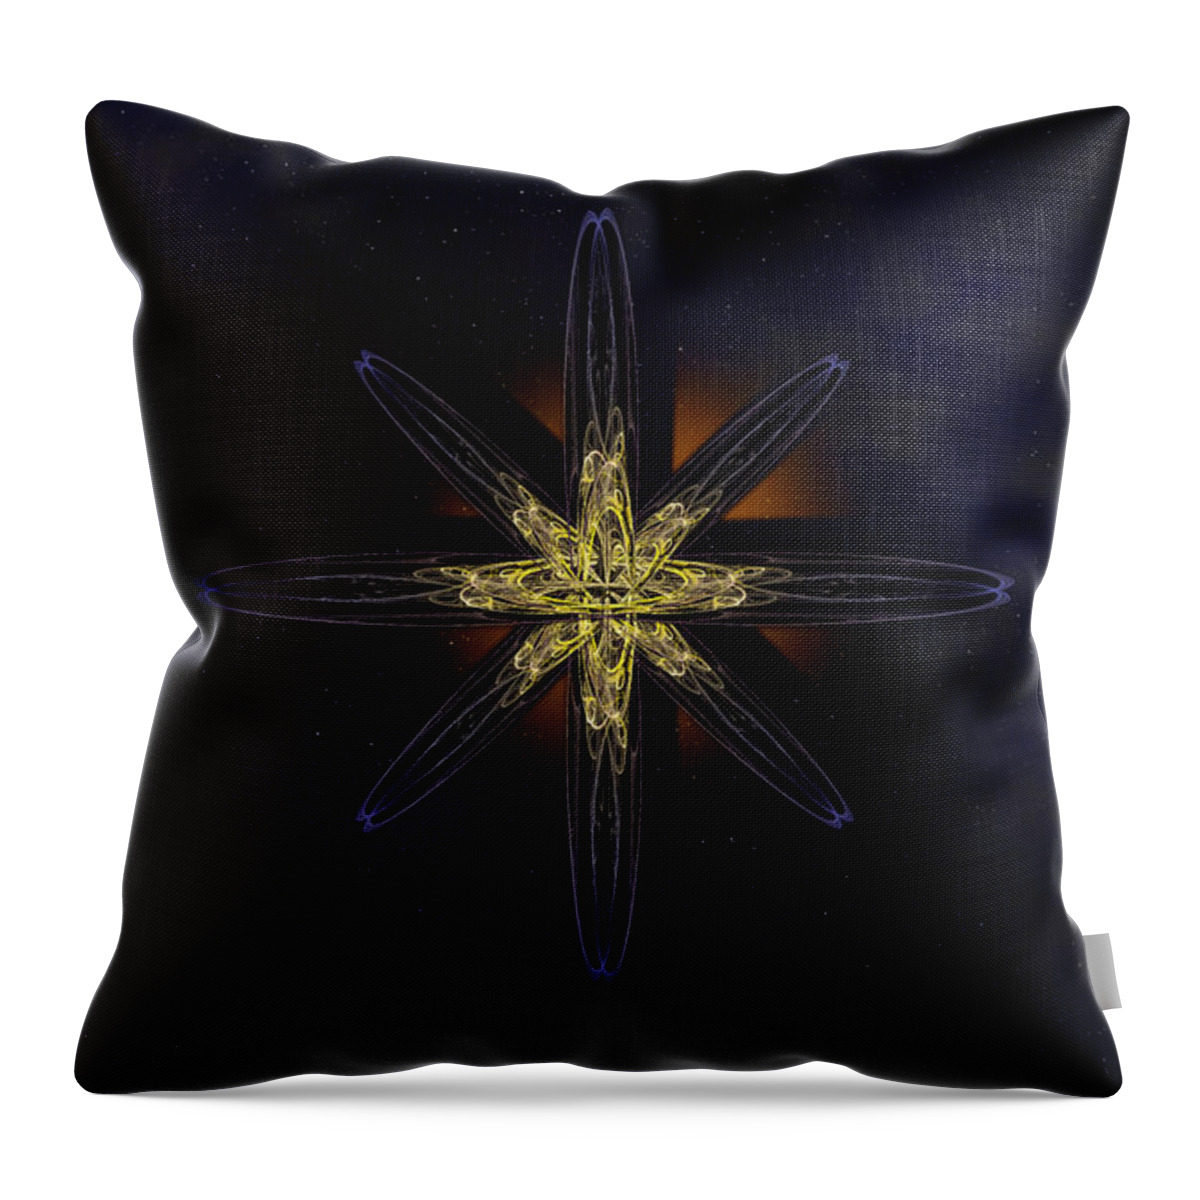 Far Away Throw Pillow featuring the digital art Cosmic Star in a Star Field by Pelo Blanco Photo